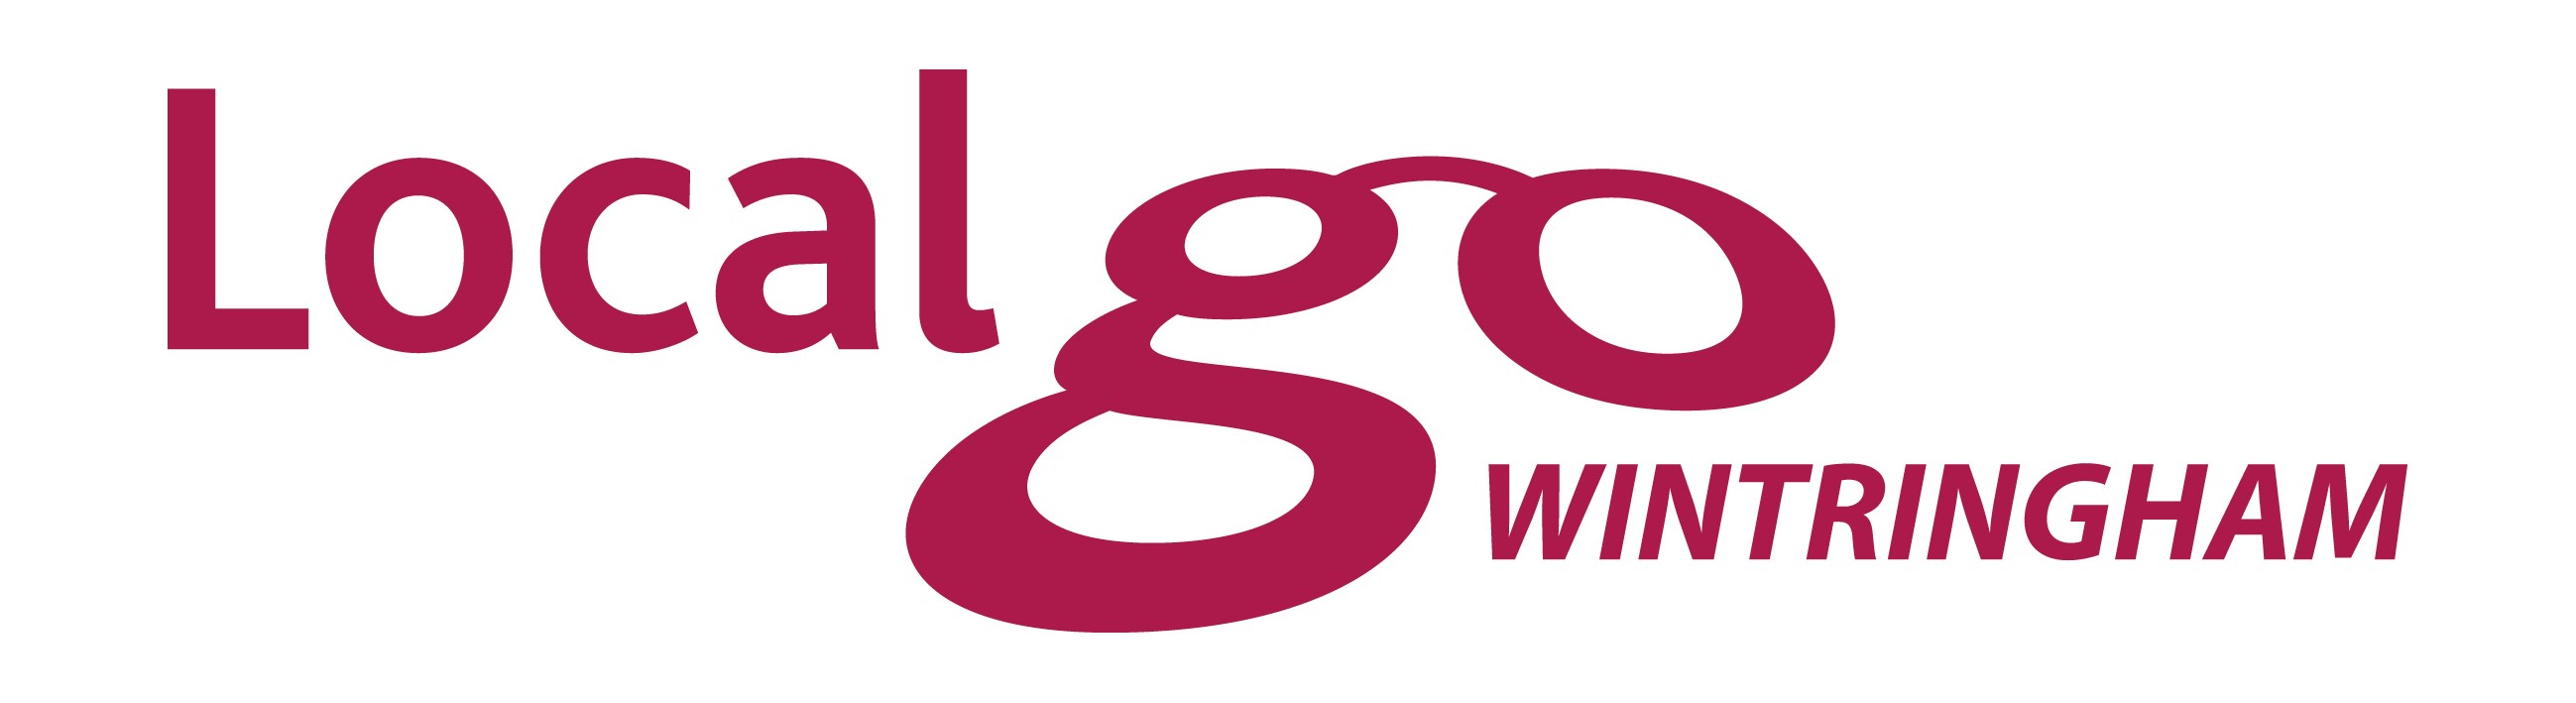 LocalGo Wintringham Logo JPG